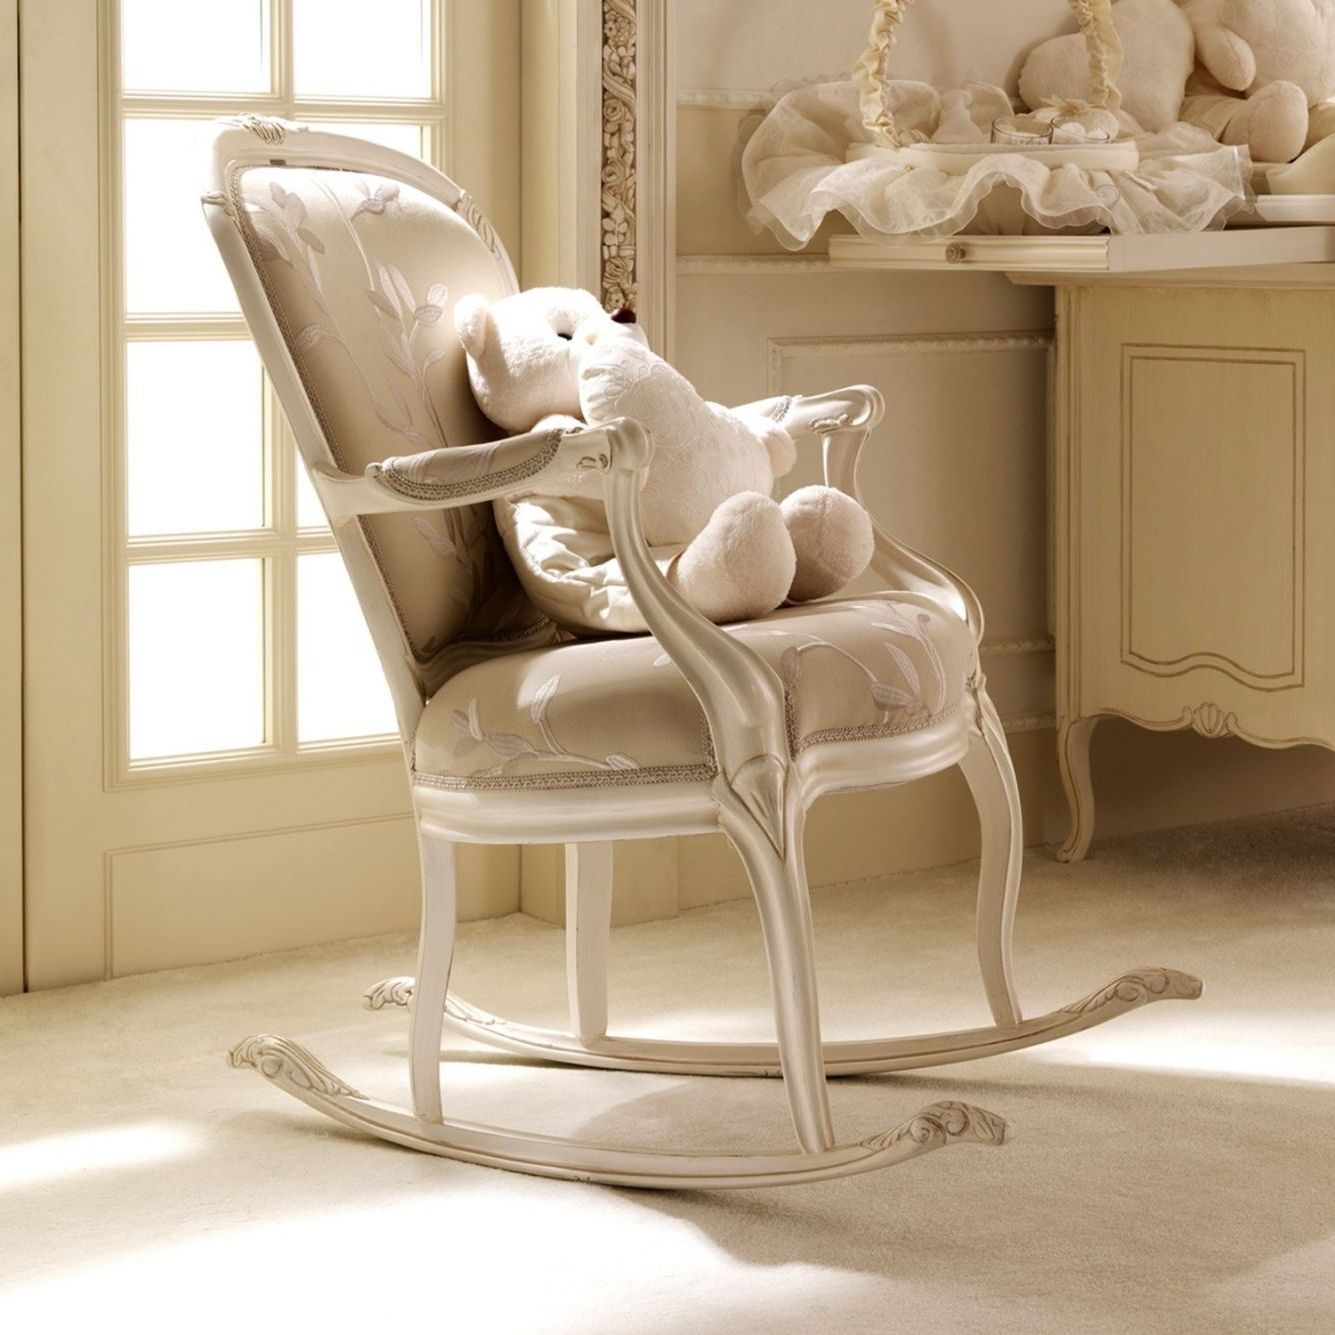 nursery room rocking chair